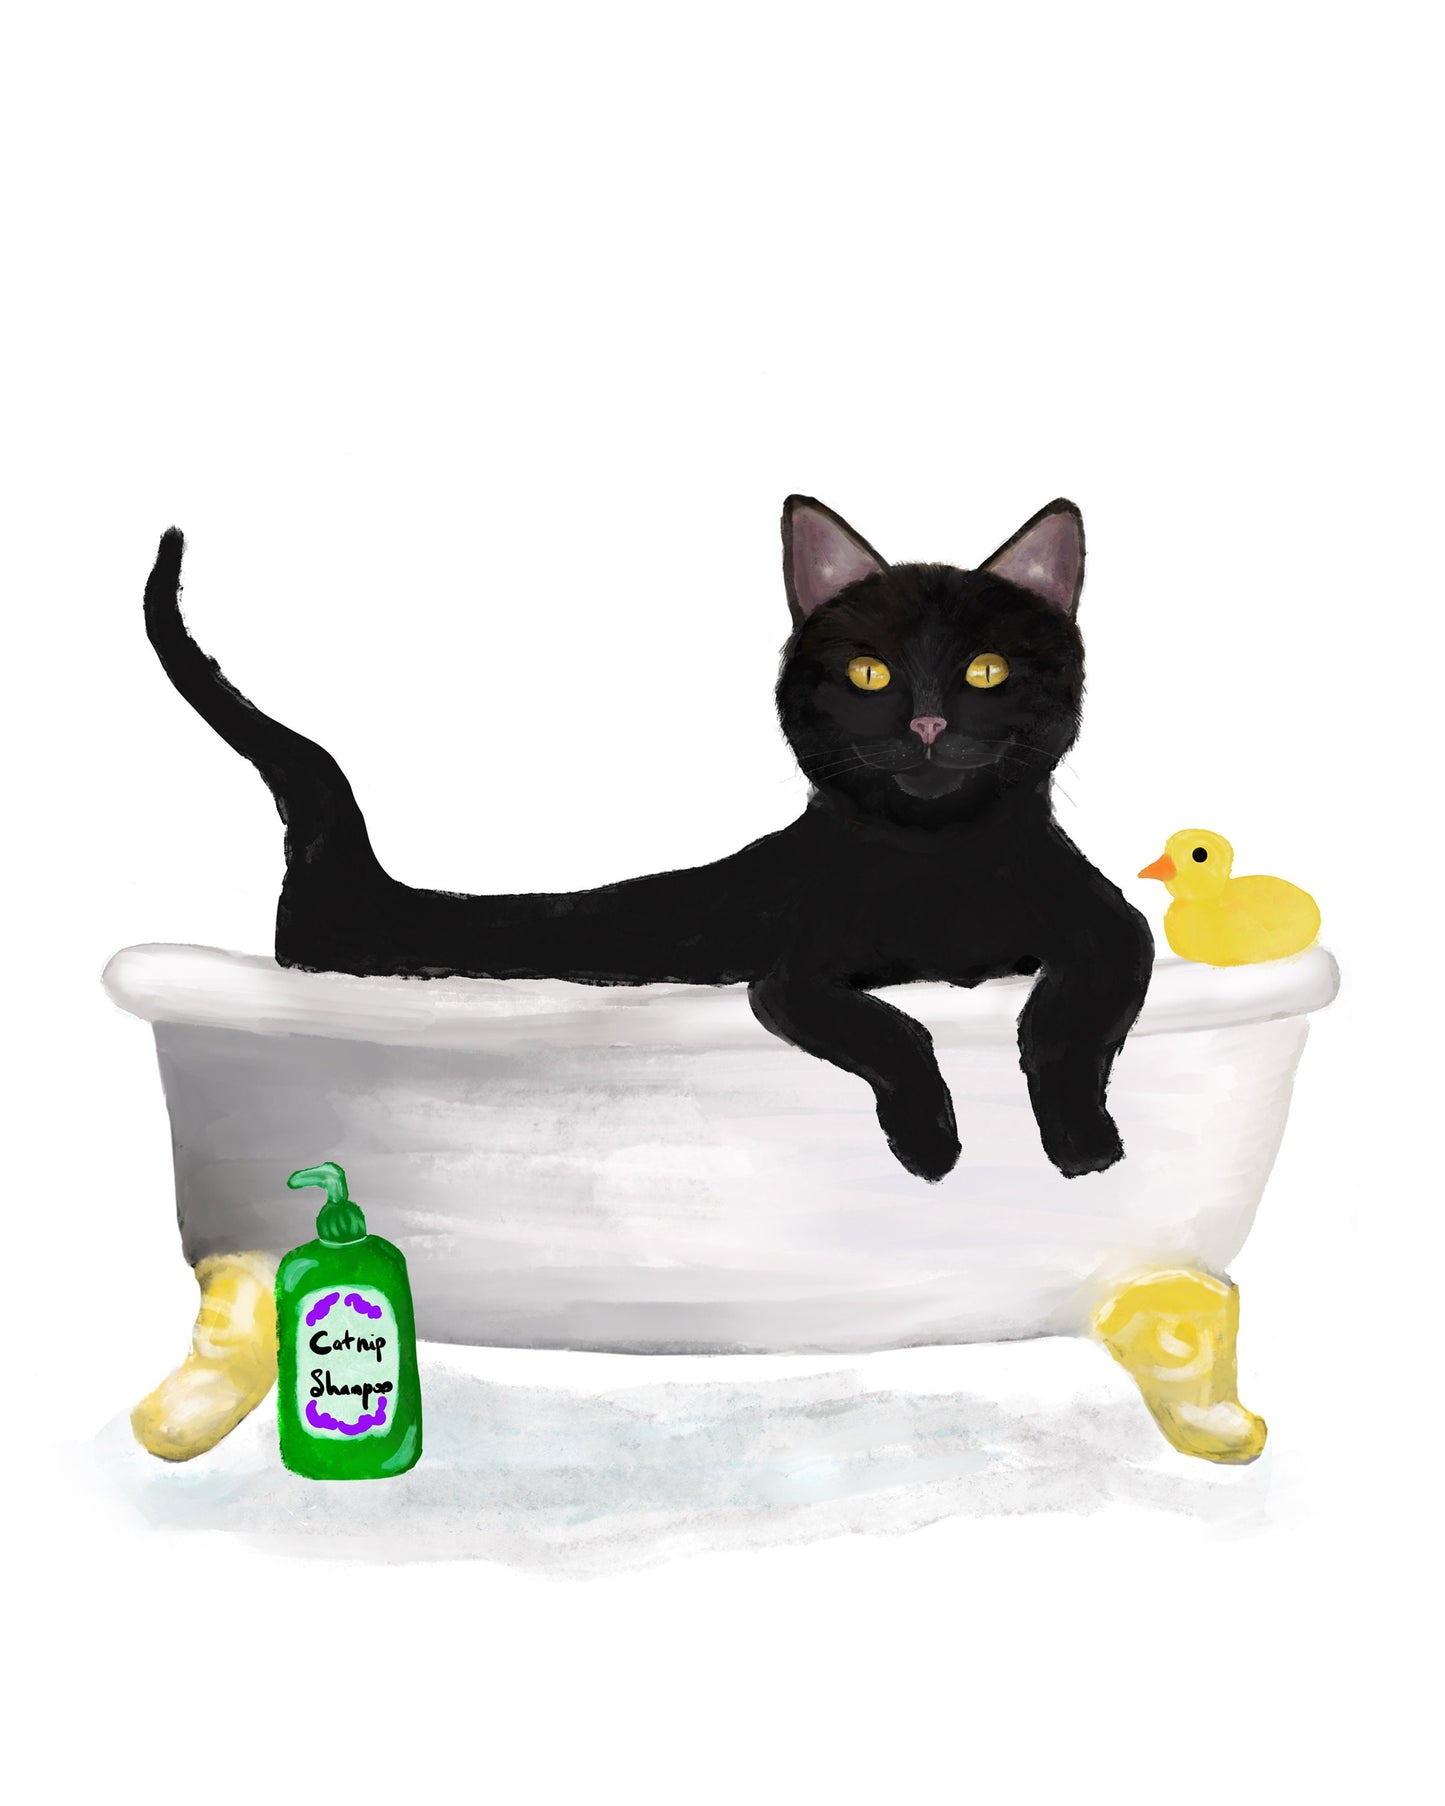 Set of 6 Black Cat Bathroom Wall Art, Bathroom Wall Decor Set, Cute Black Cat In Bath Artwork, Cat On Toilet Print, Cat Lover Gift